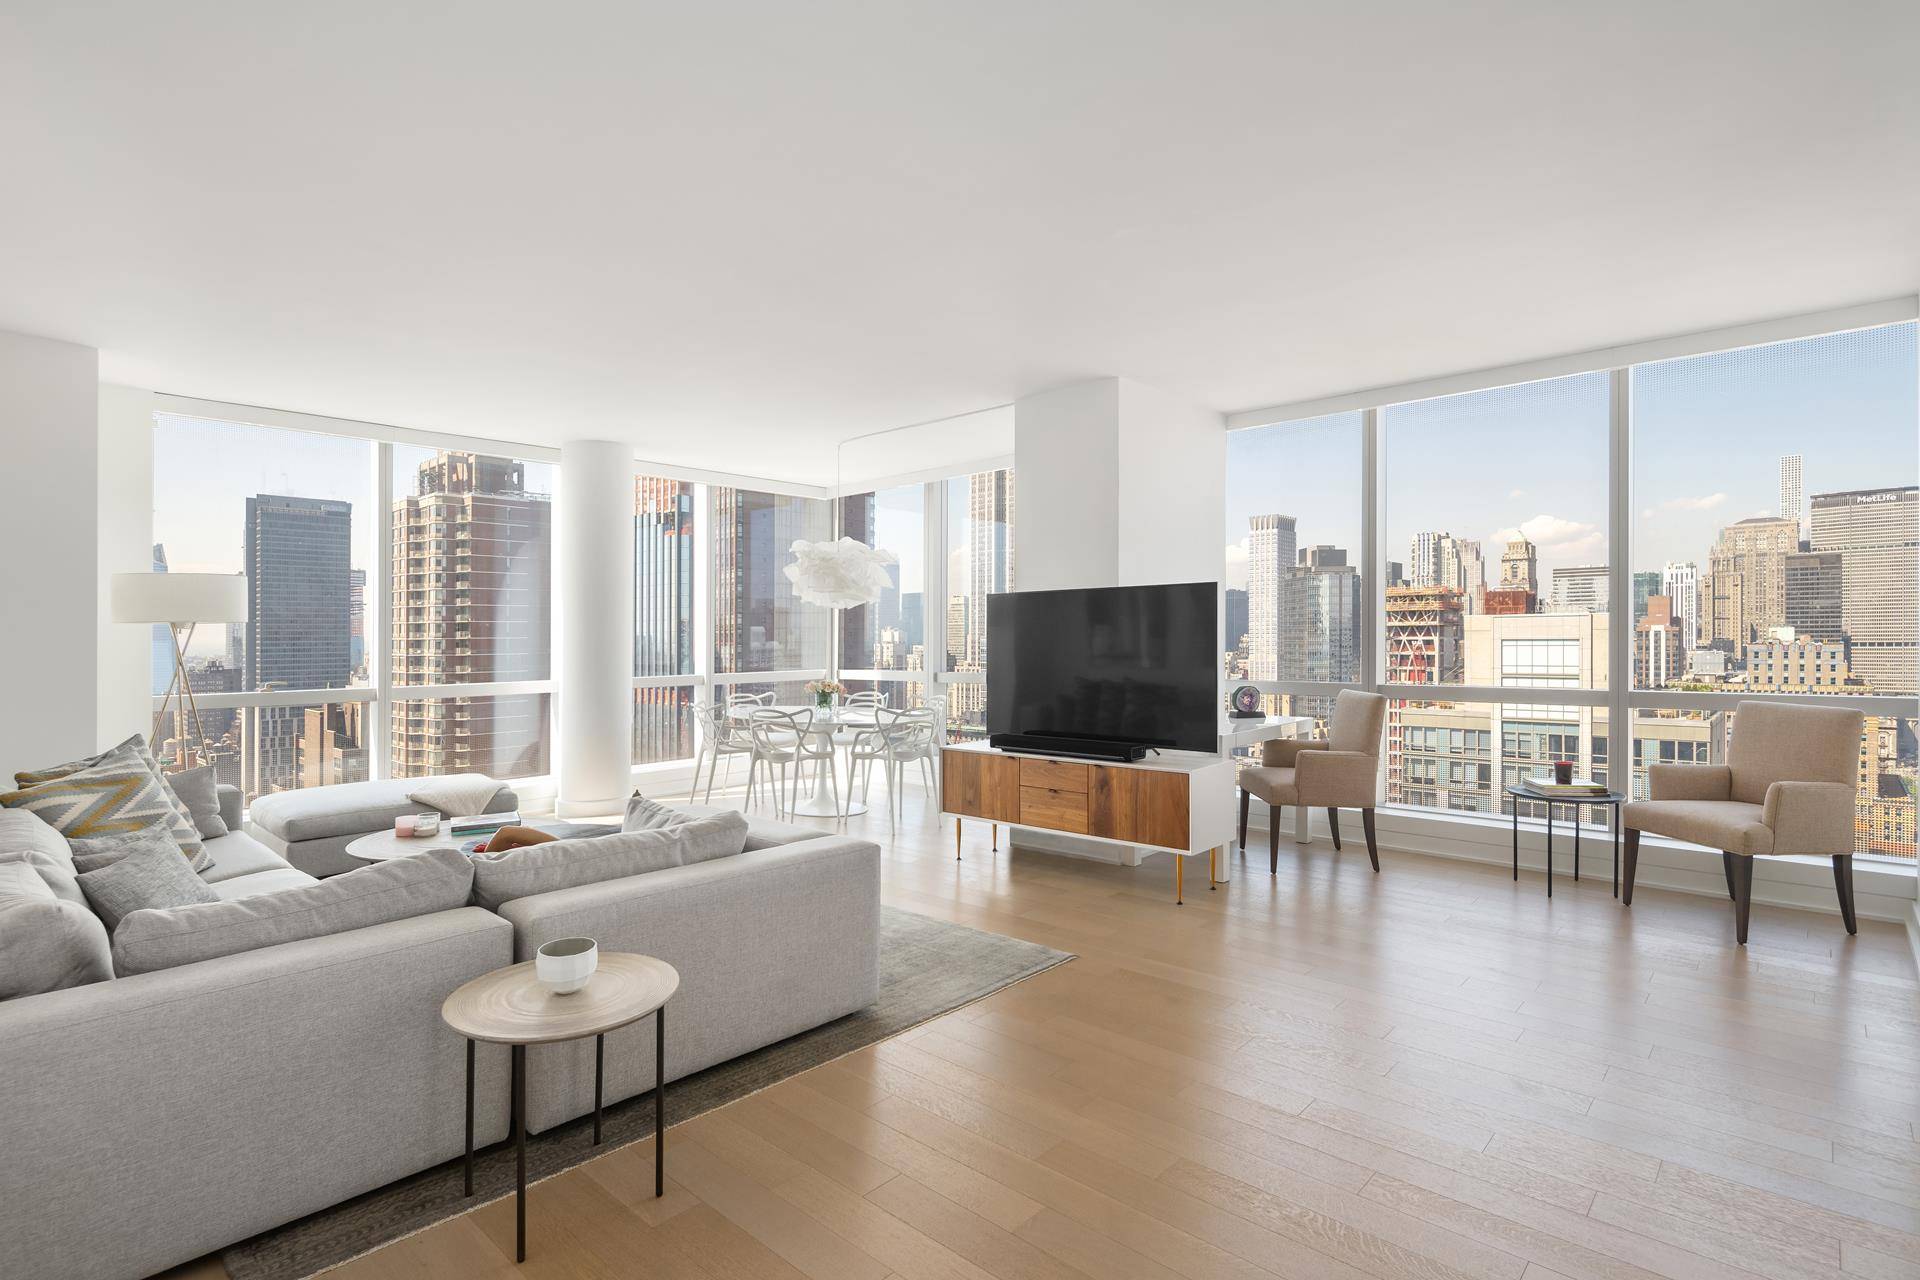 Designed by Pritzker Prize winning architect Christian de Portzamparc, 400 Park Avenue South is a Modern, minimalized furnished apartment.